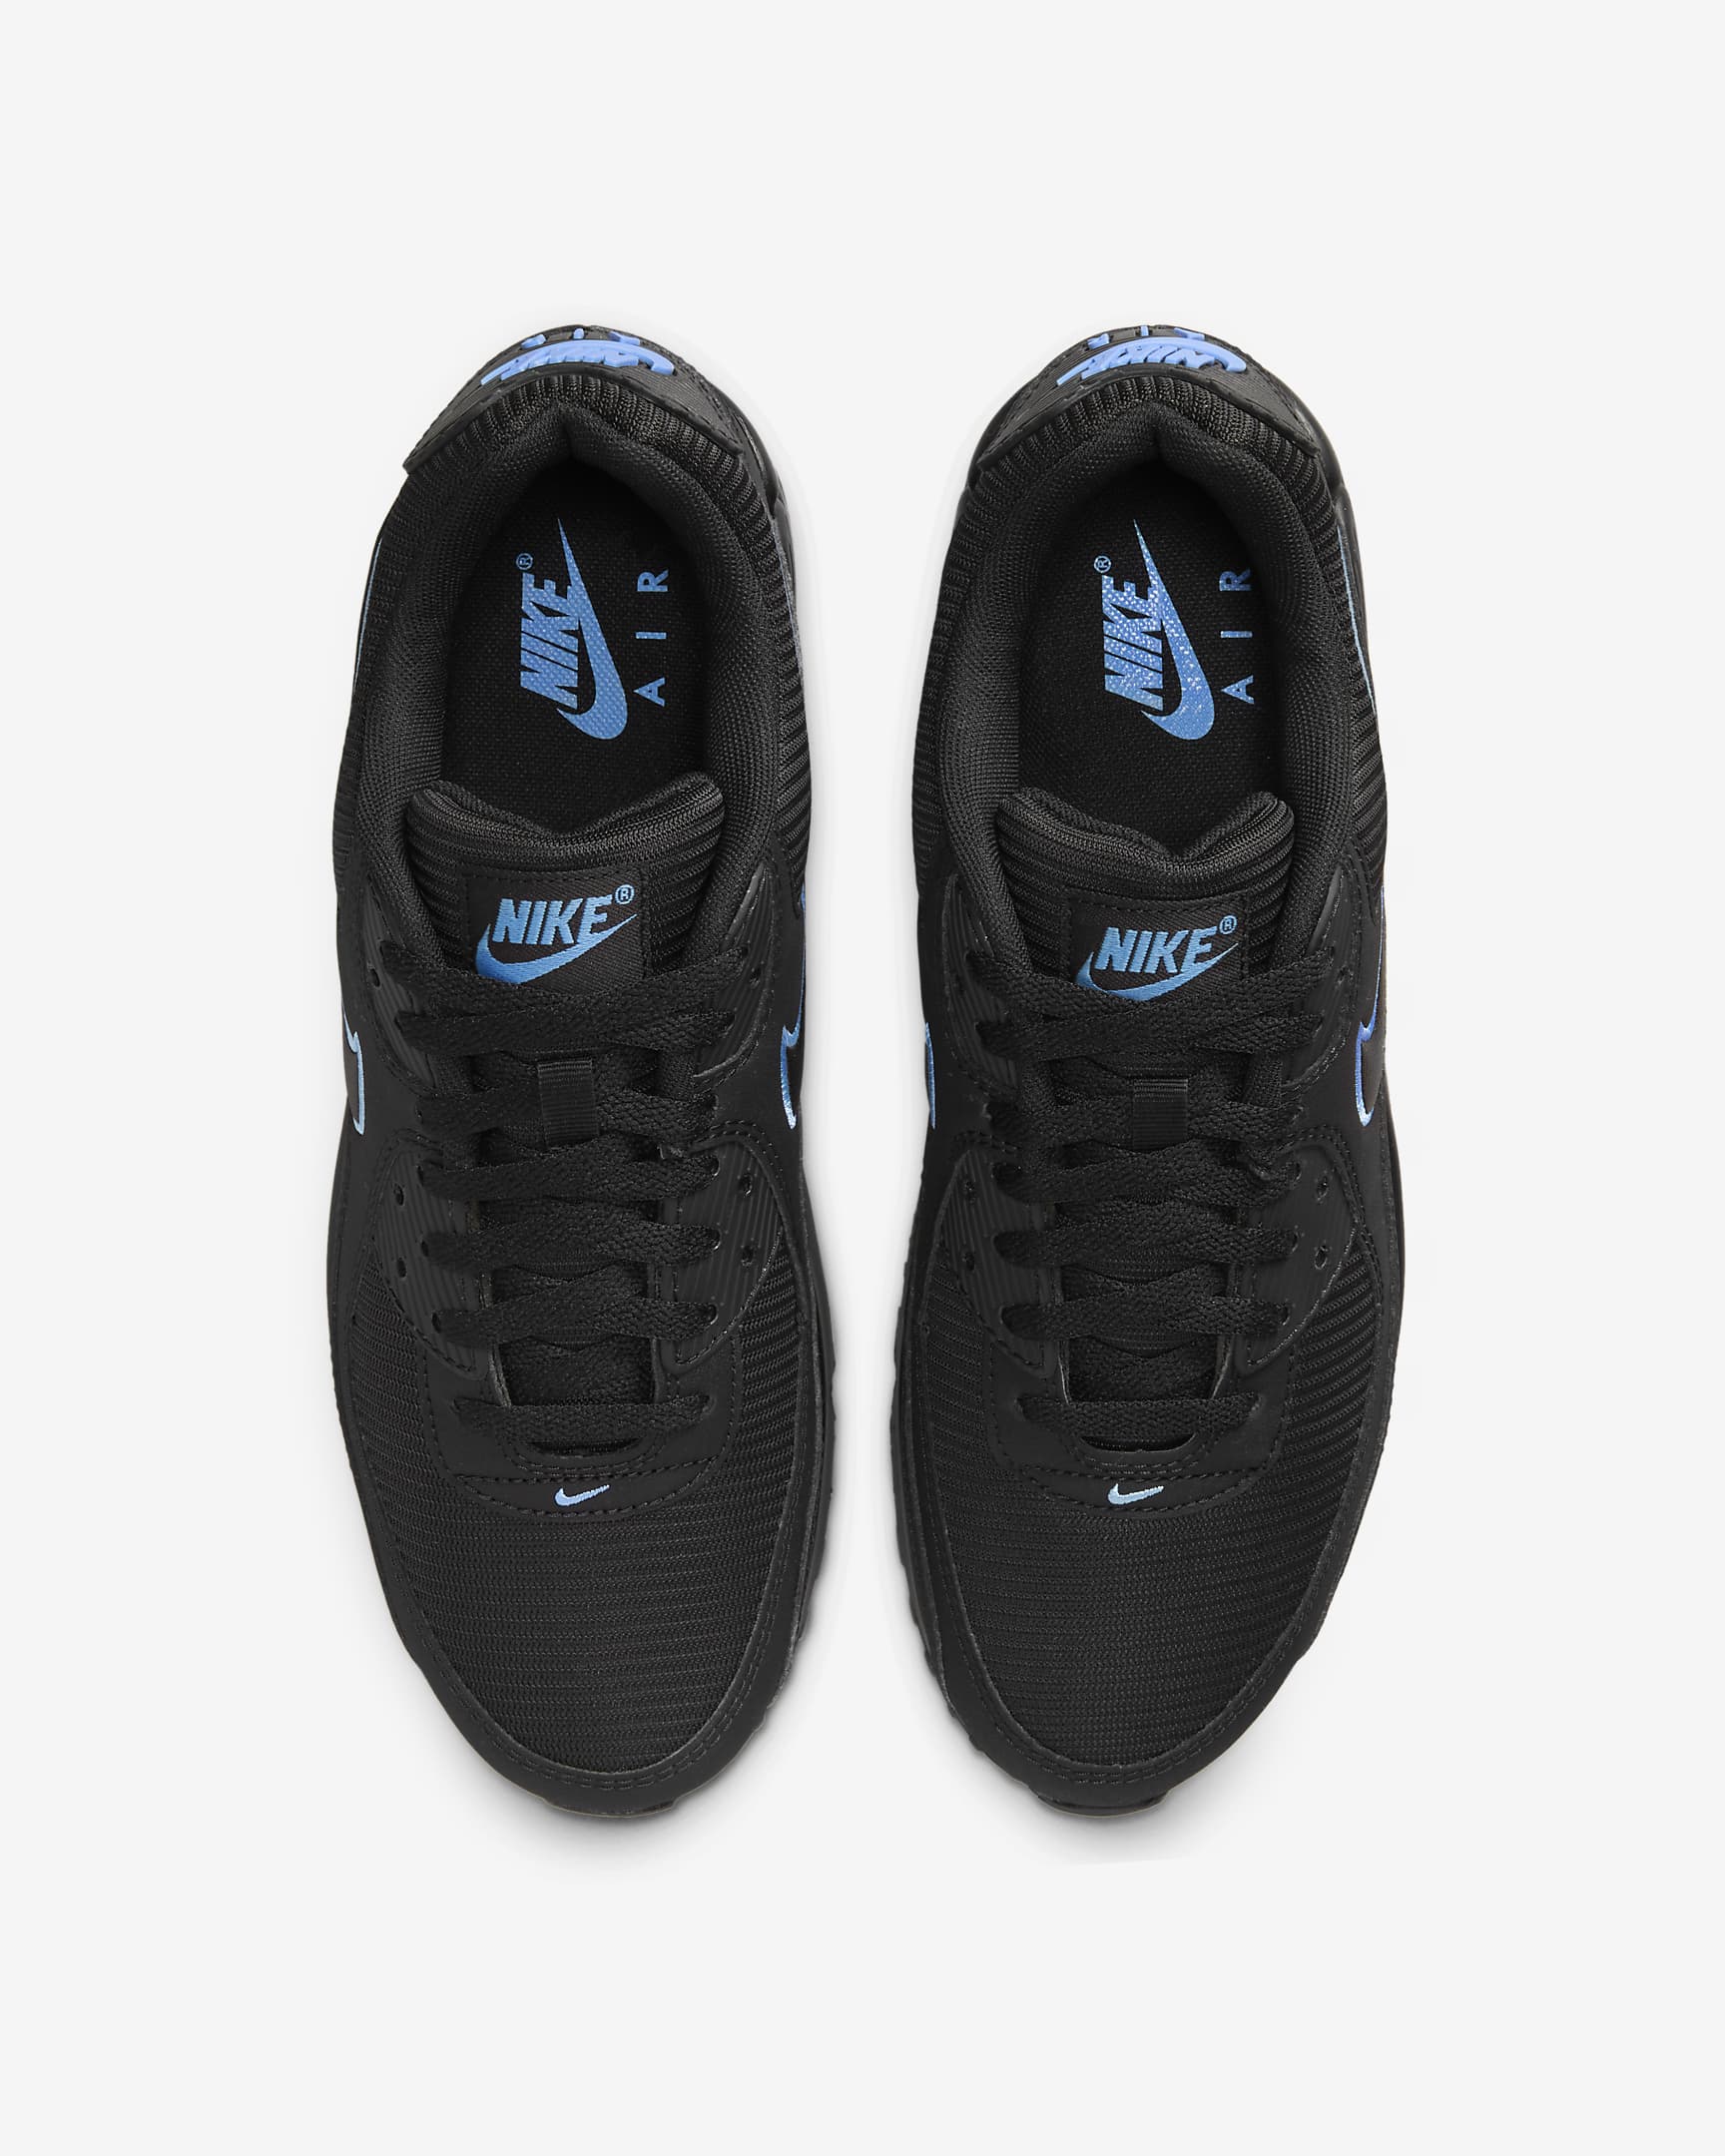 Nike Air Max 90 Men's Shoes - Black/University Blue